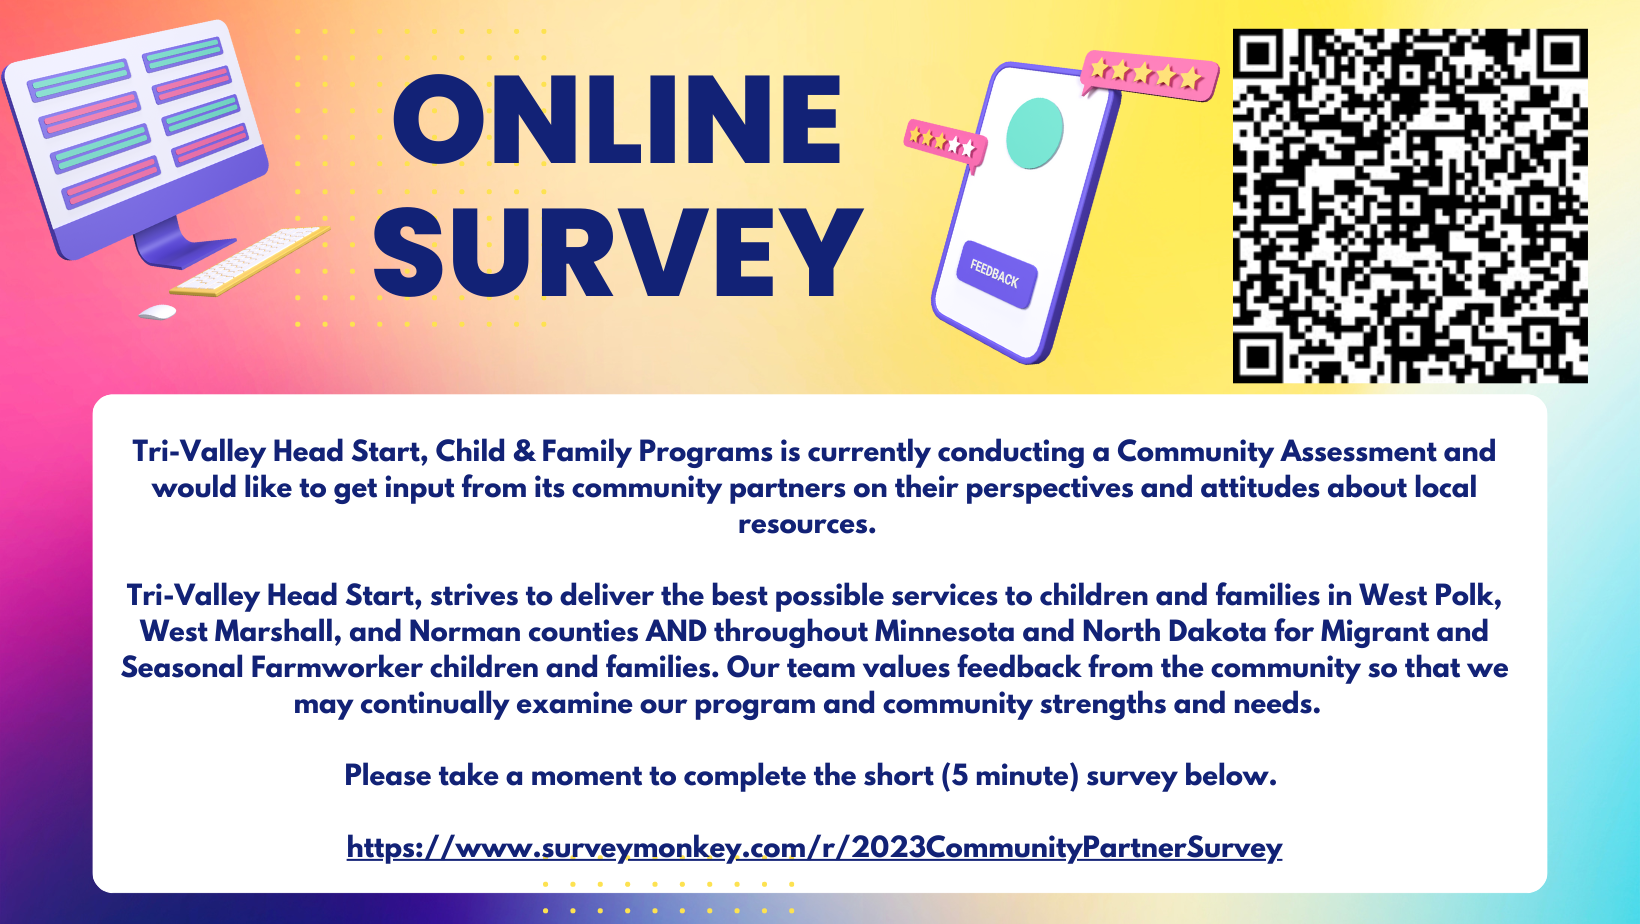 Online Community Needs Assessment Survey Template